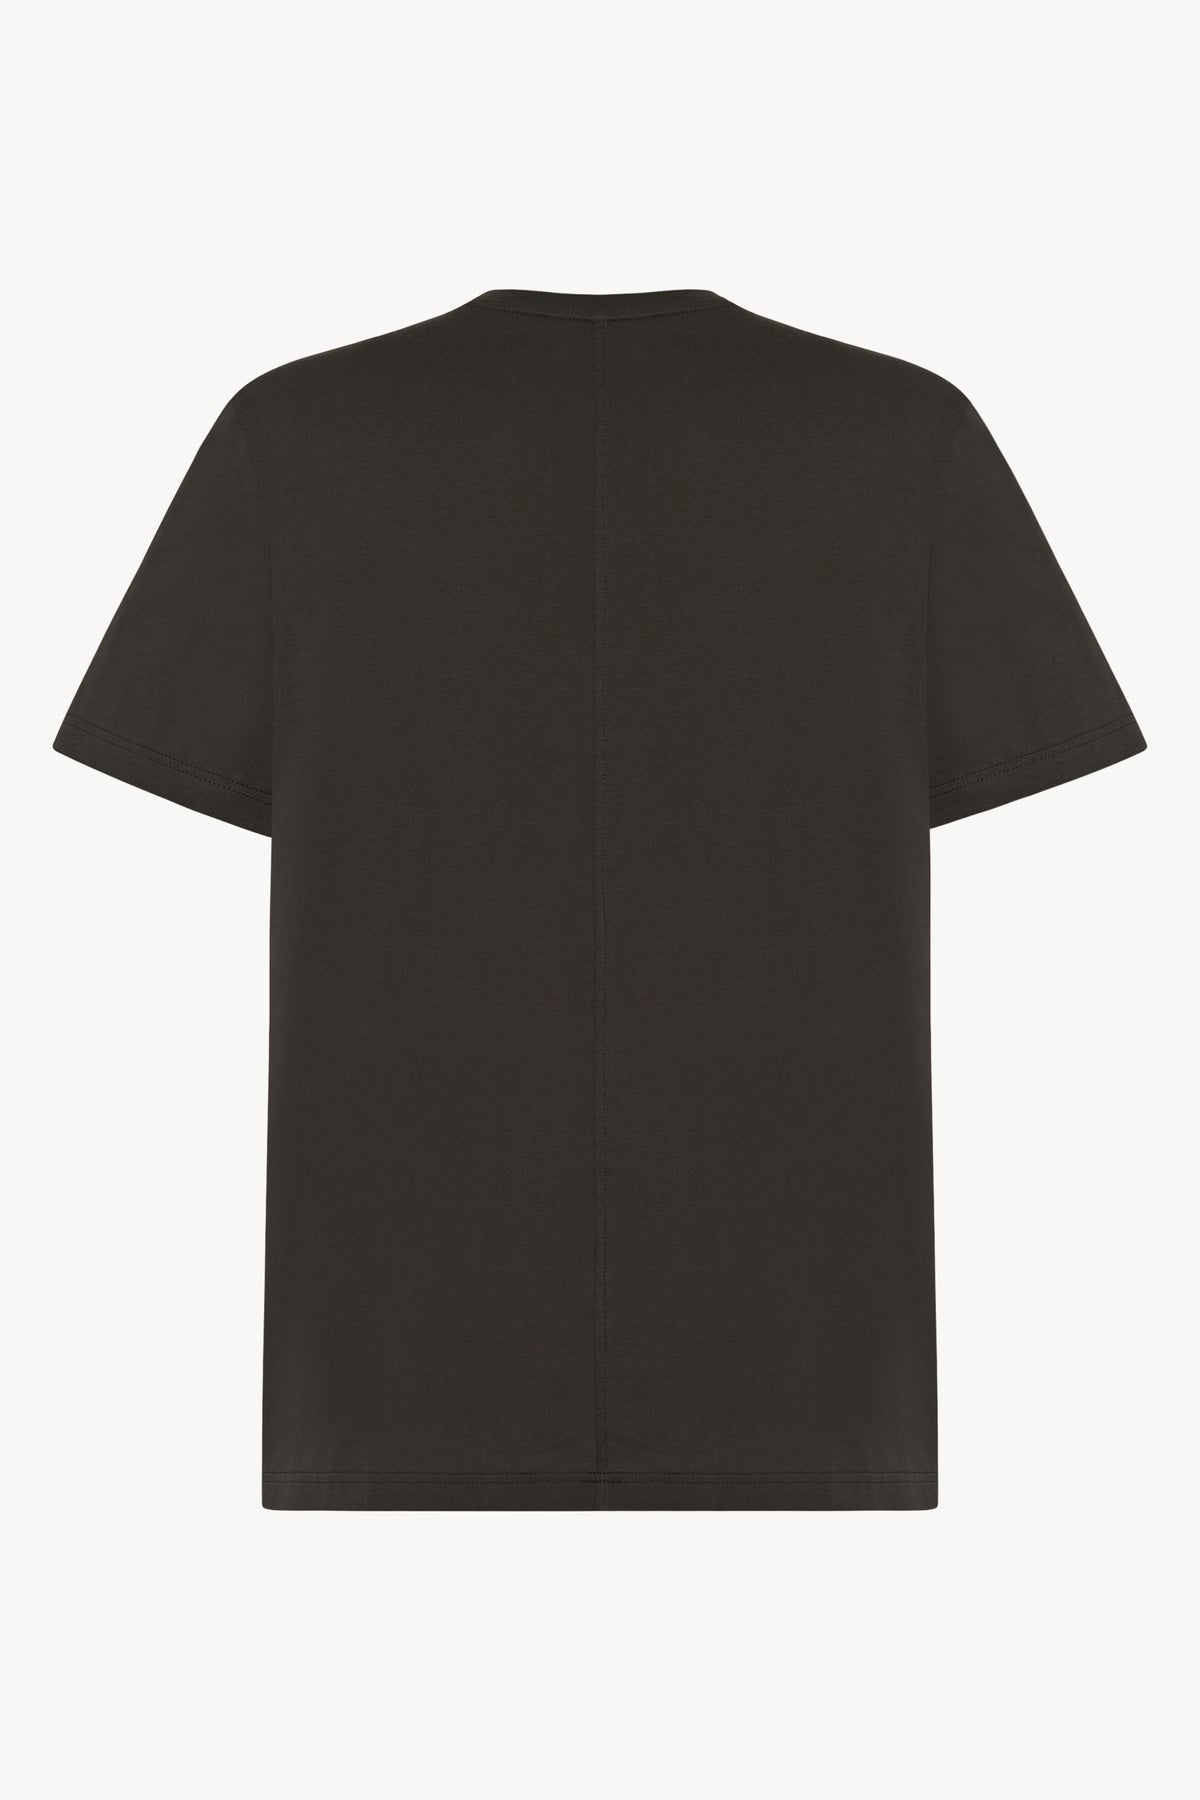 The row LUKE T-SHIRT Tシャツ 黒 ユニセックス対応 ①着丈69cm